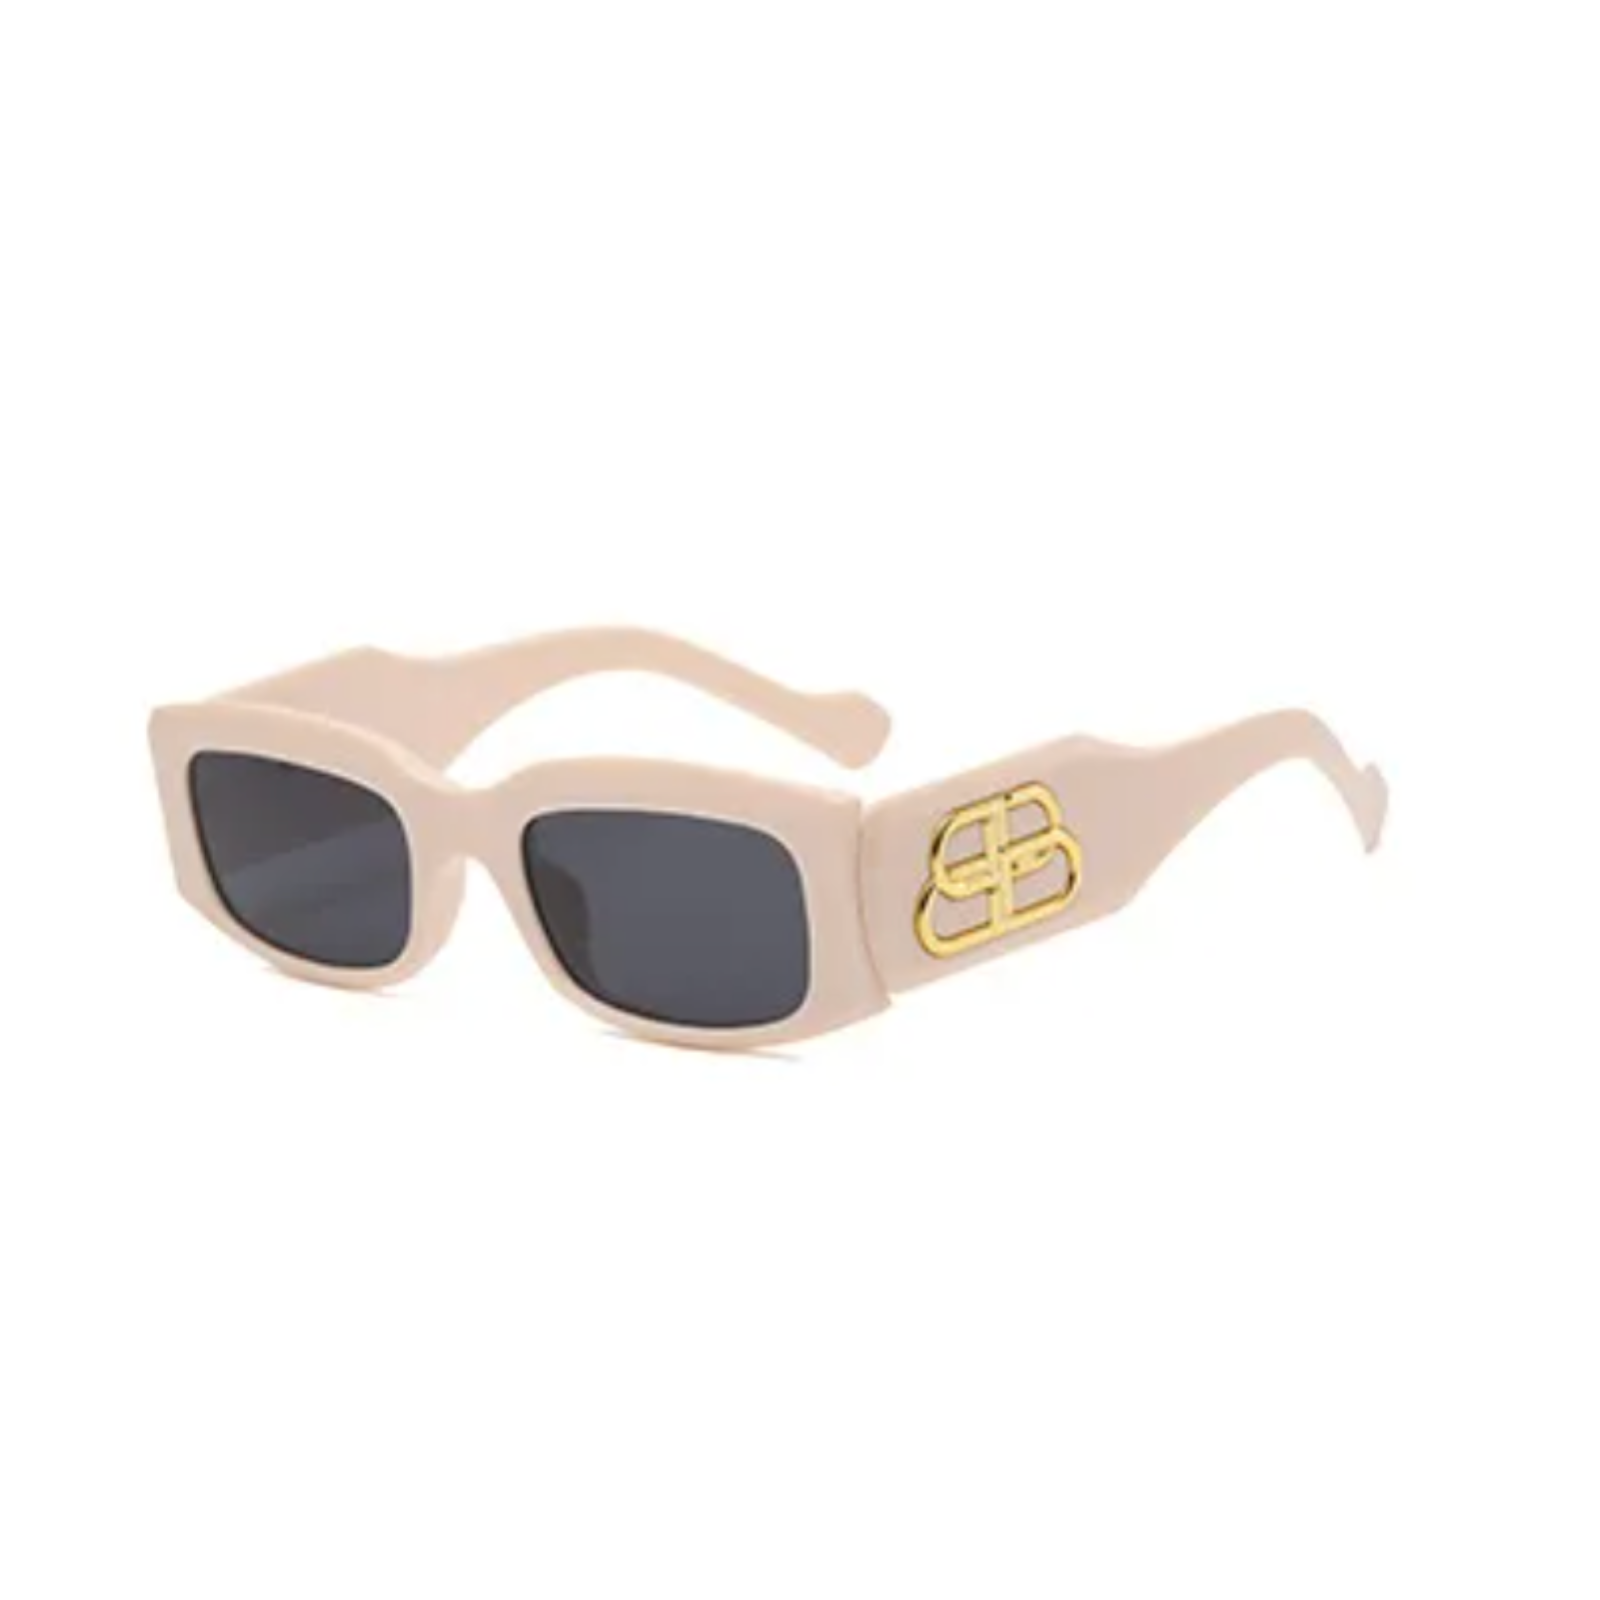 Becca Sunglasses + Cream